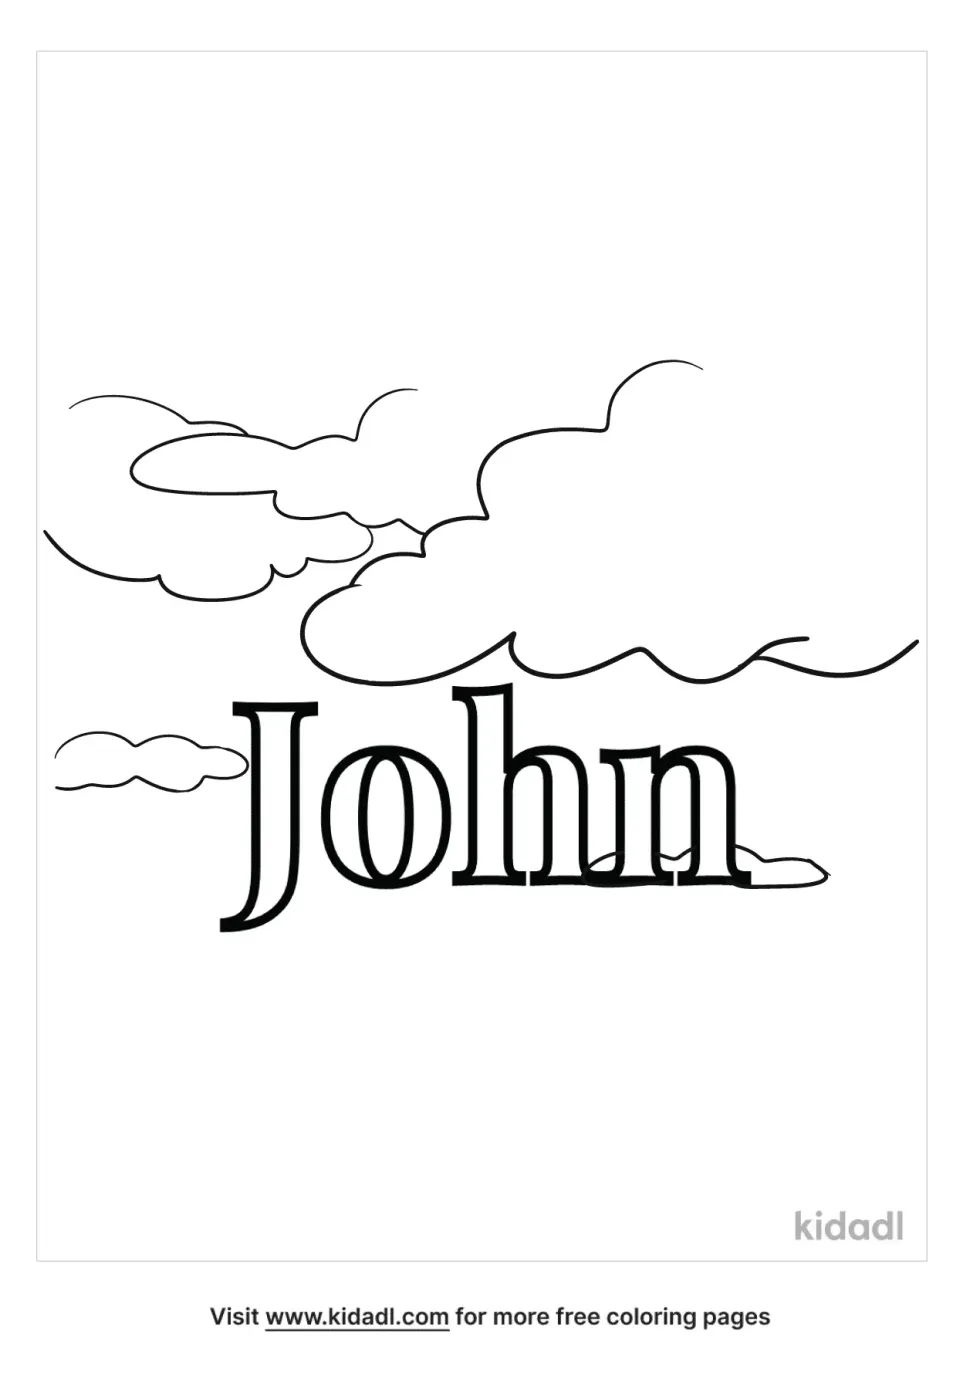 John Name Coloring Page